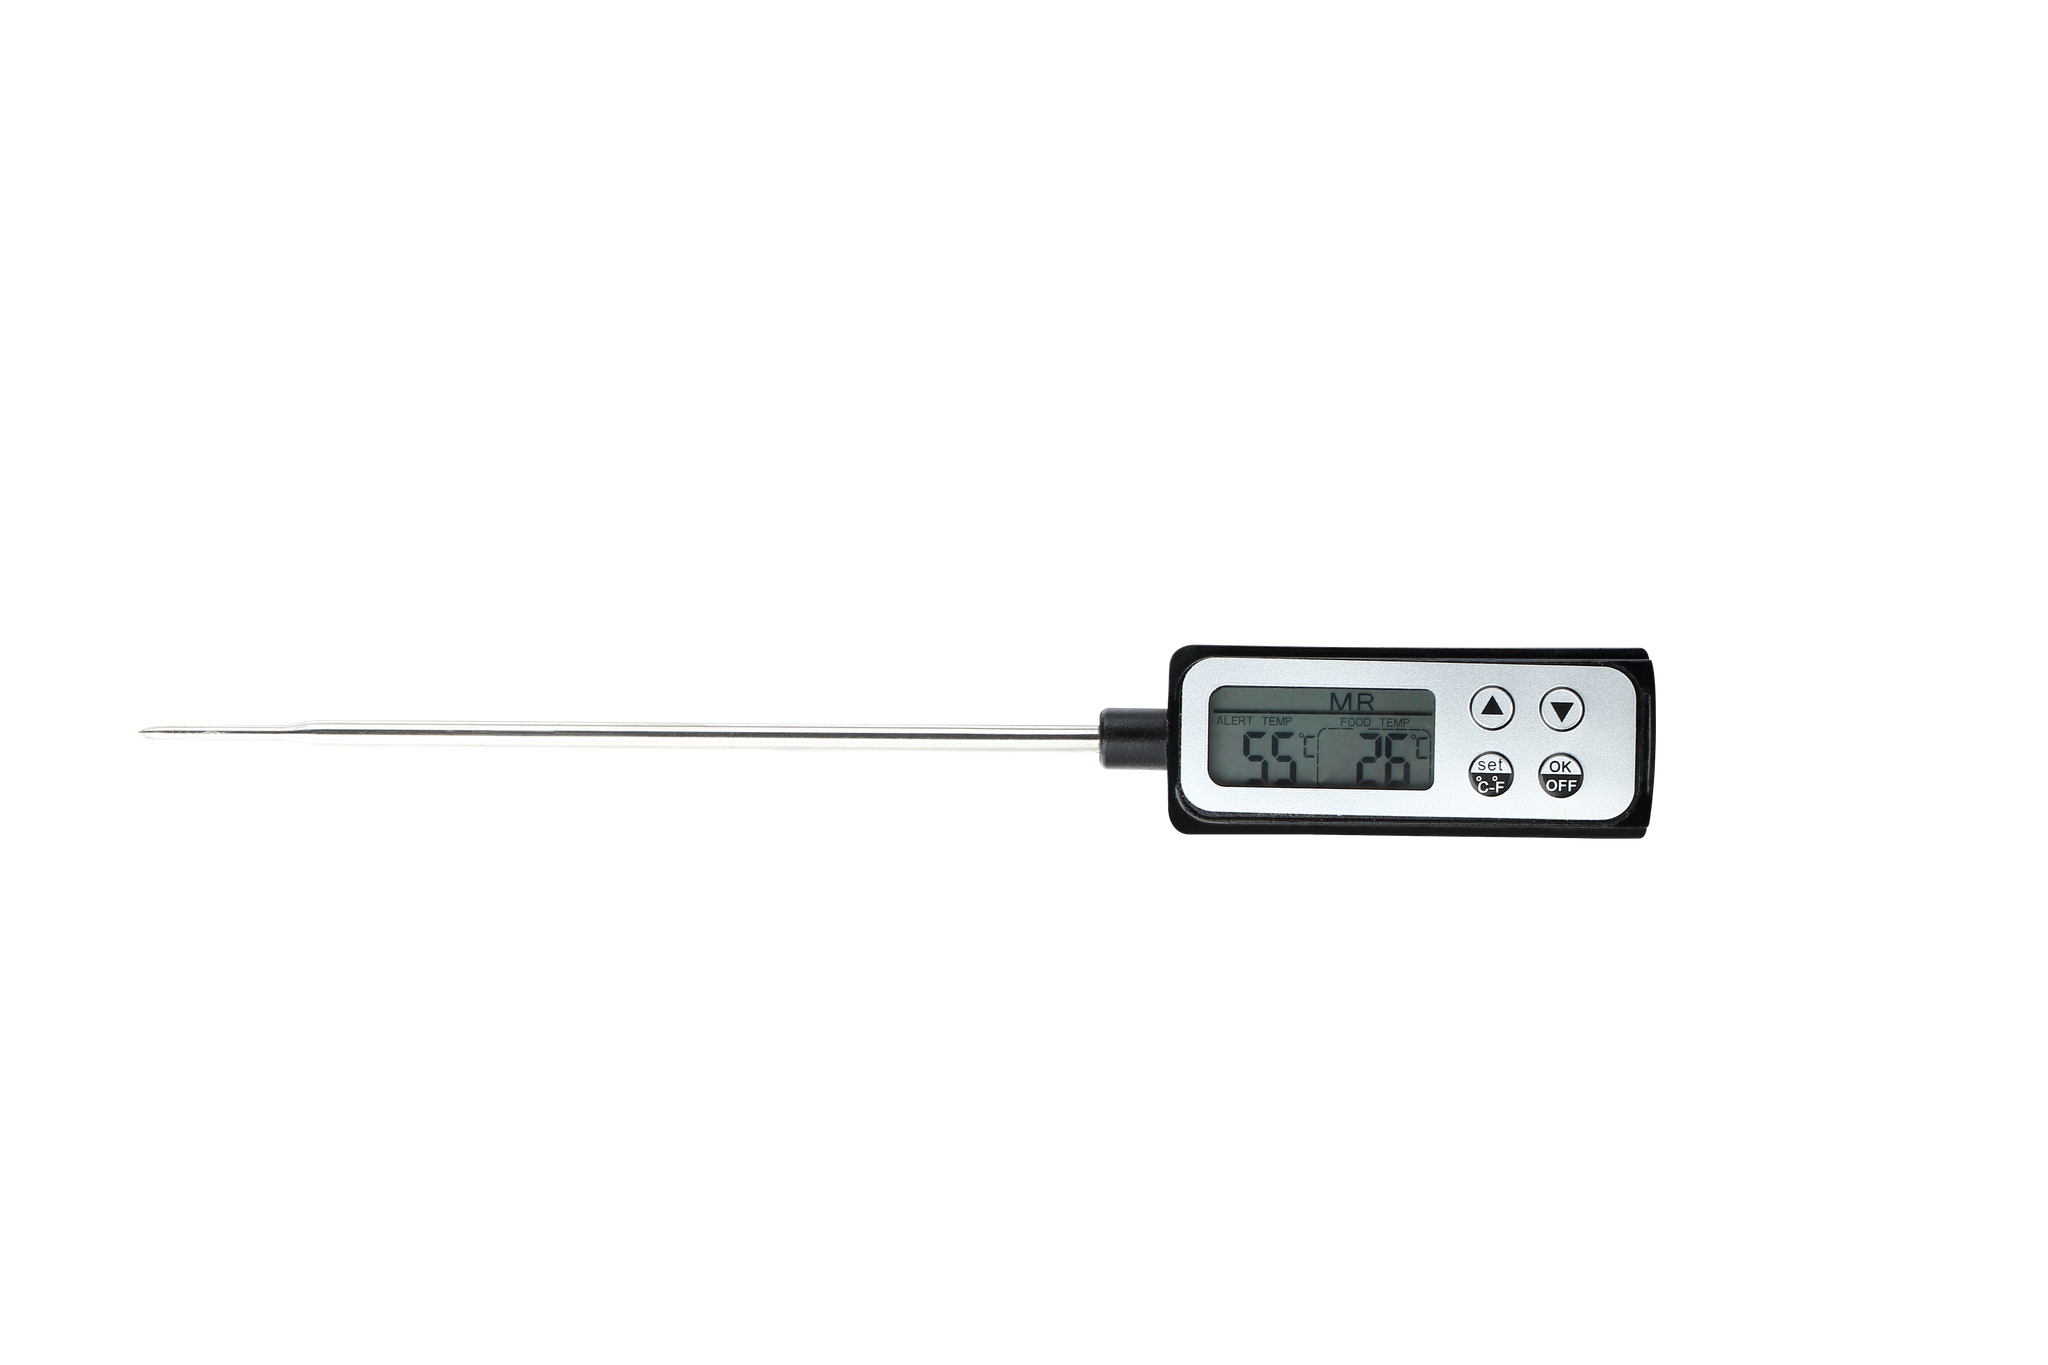 Spatula thermometer grey